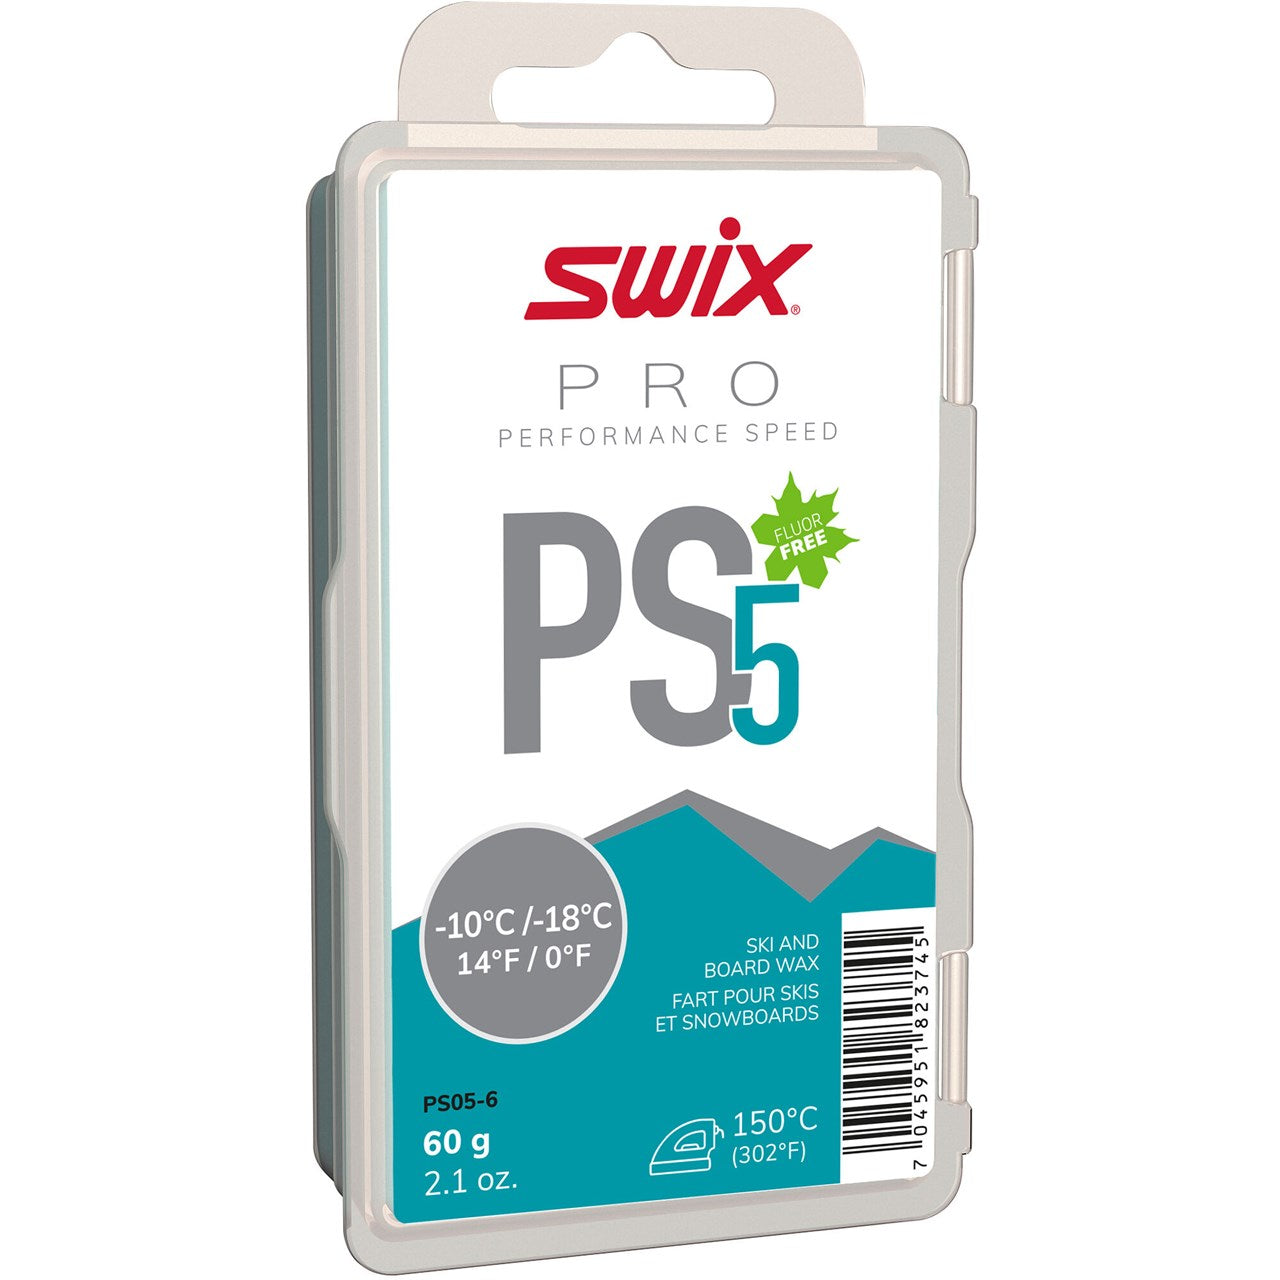 Swix PS5 Turquoise 60g - Performance Speed SKI & SNOWBOARD WAX Swix   